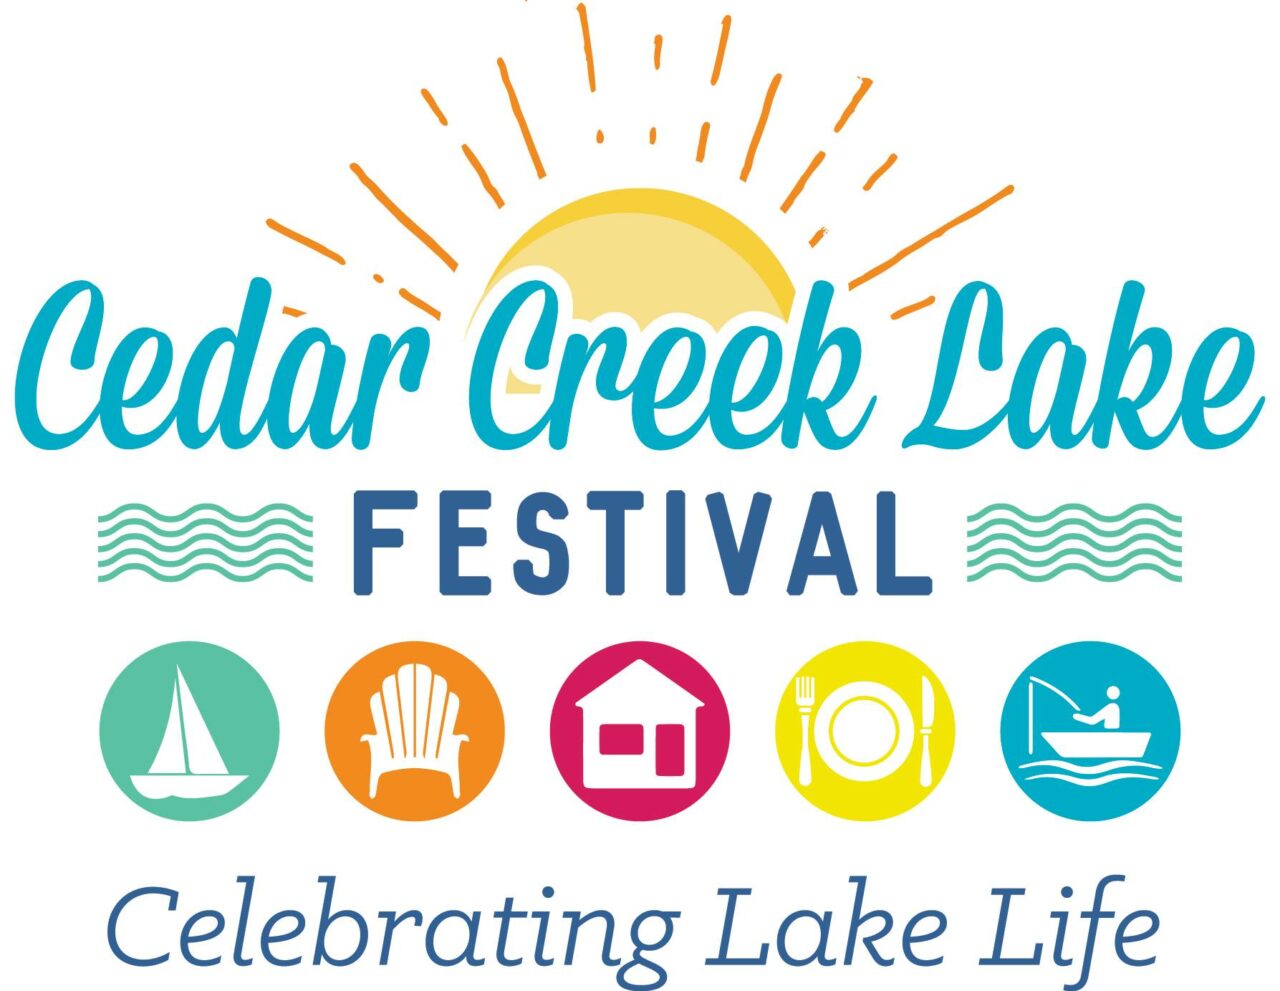 Cedar Creek Lake Festival 2 Cedar Creek Festival CedarCreekLake.Online